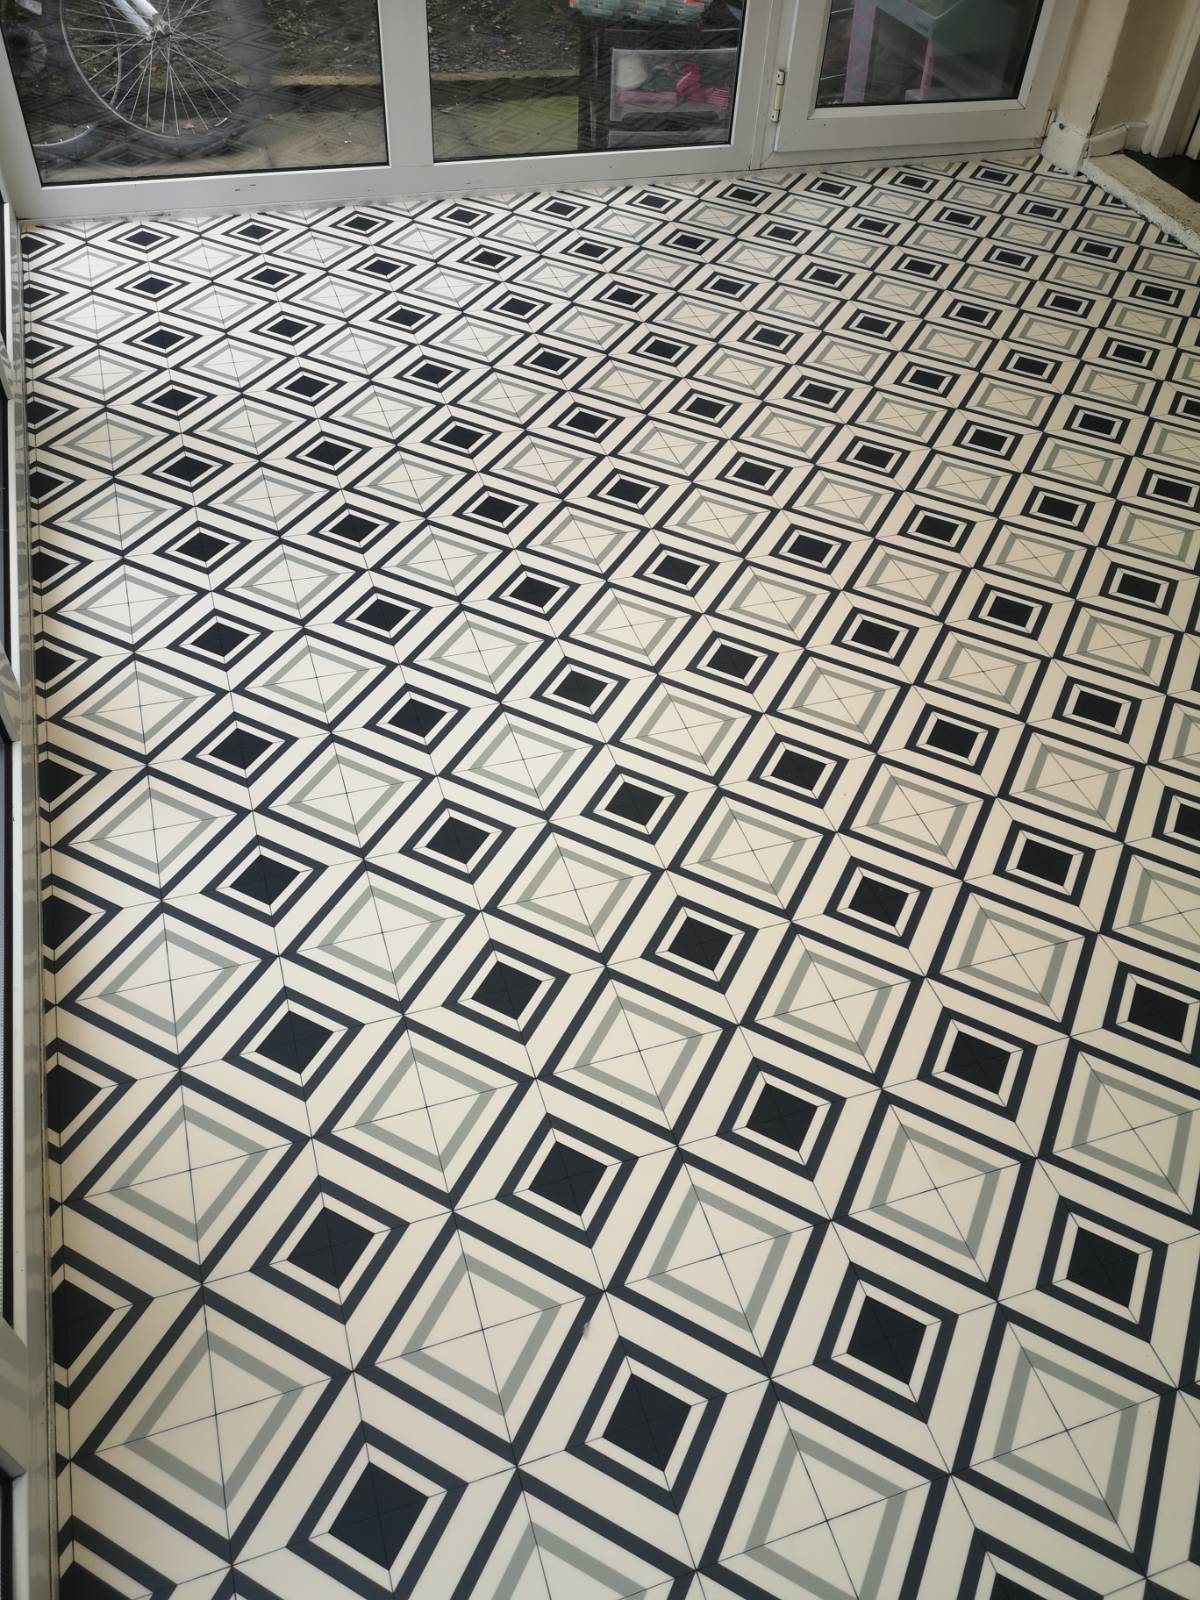 vinyl flooring with tile design in empty kitchen 